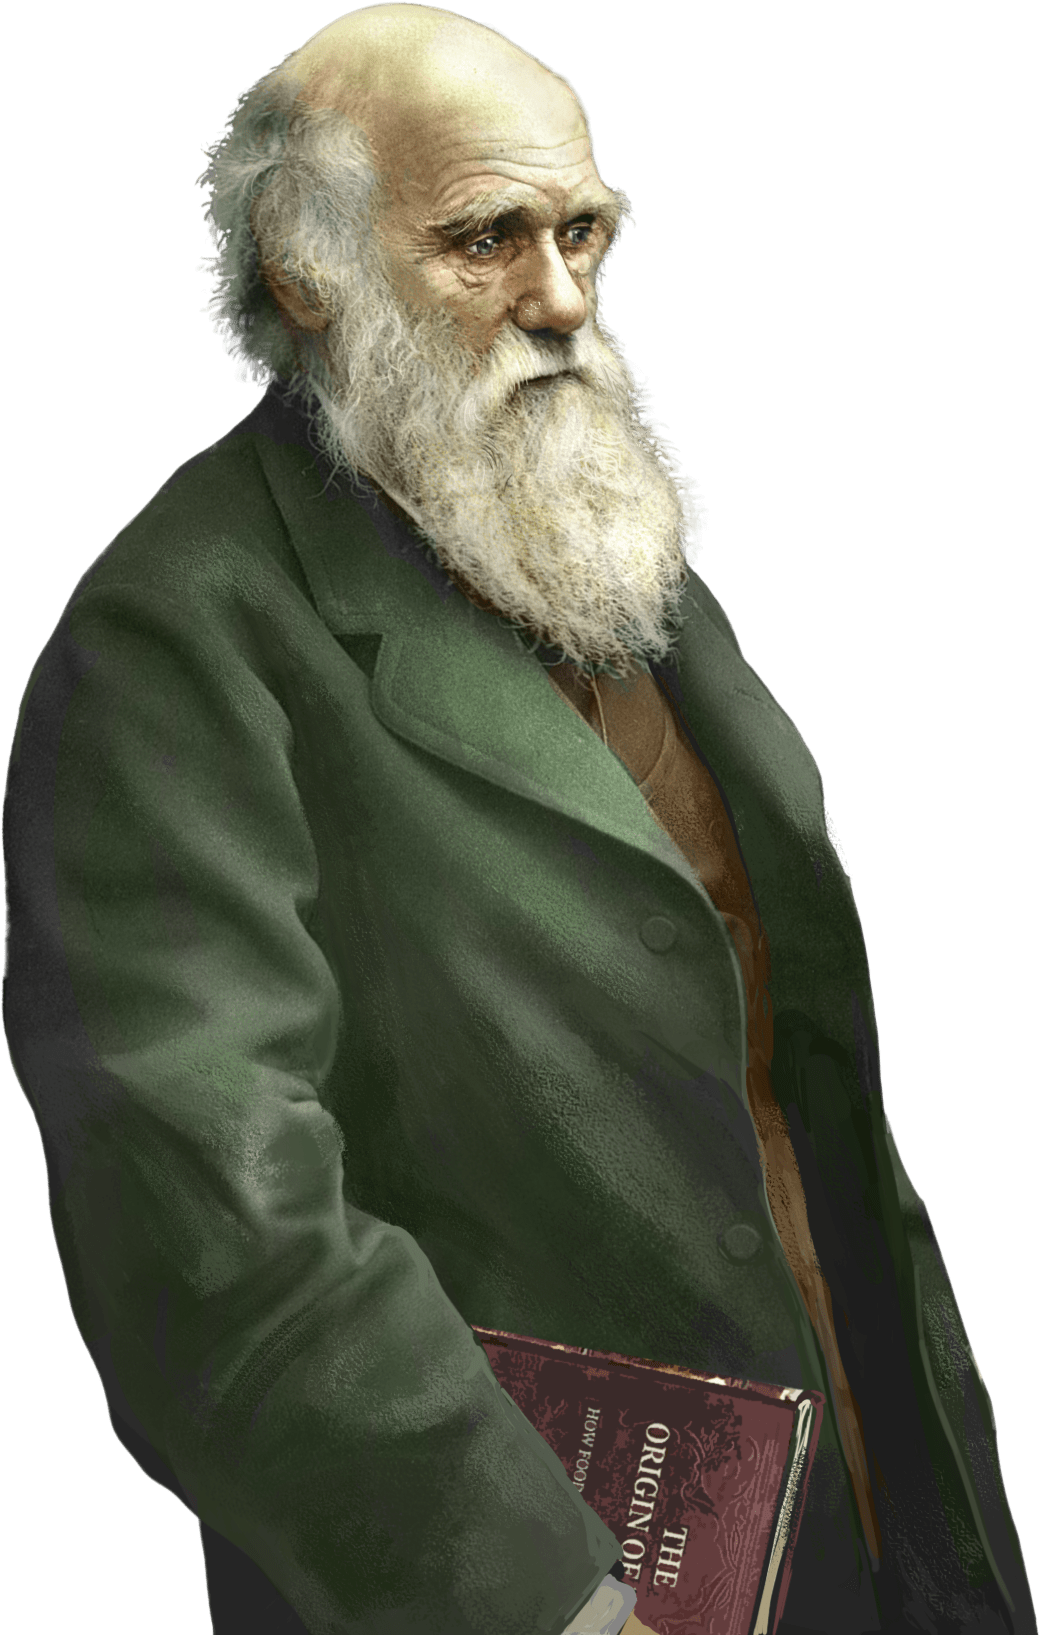 Дарвин портрет. Дж дарвин